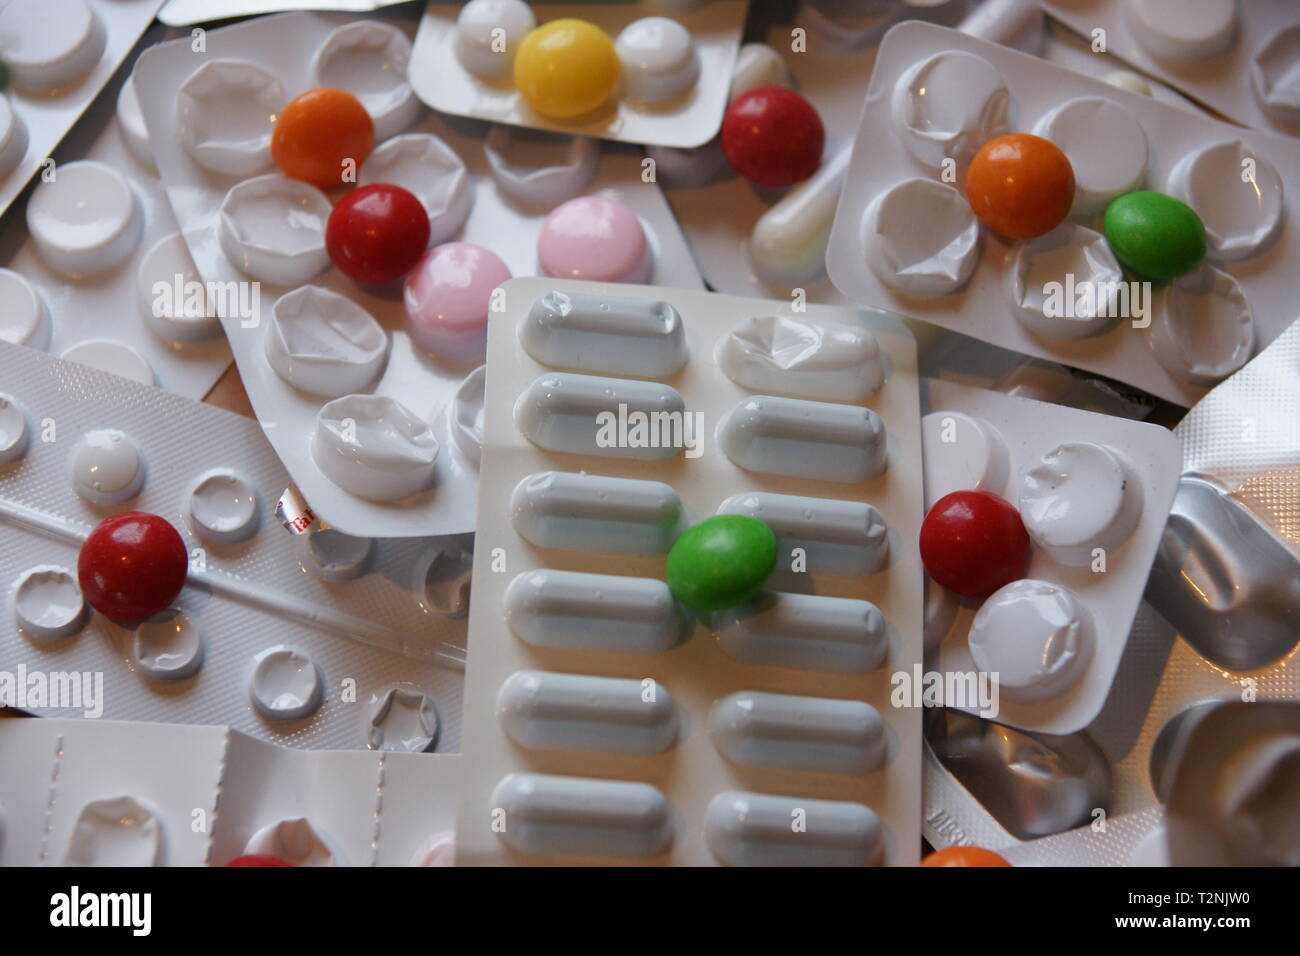 prescription drugs and medication, chemists, pharmacy Stock Photo